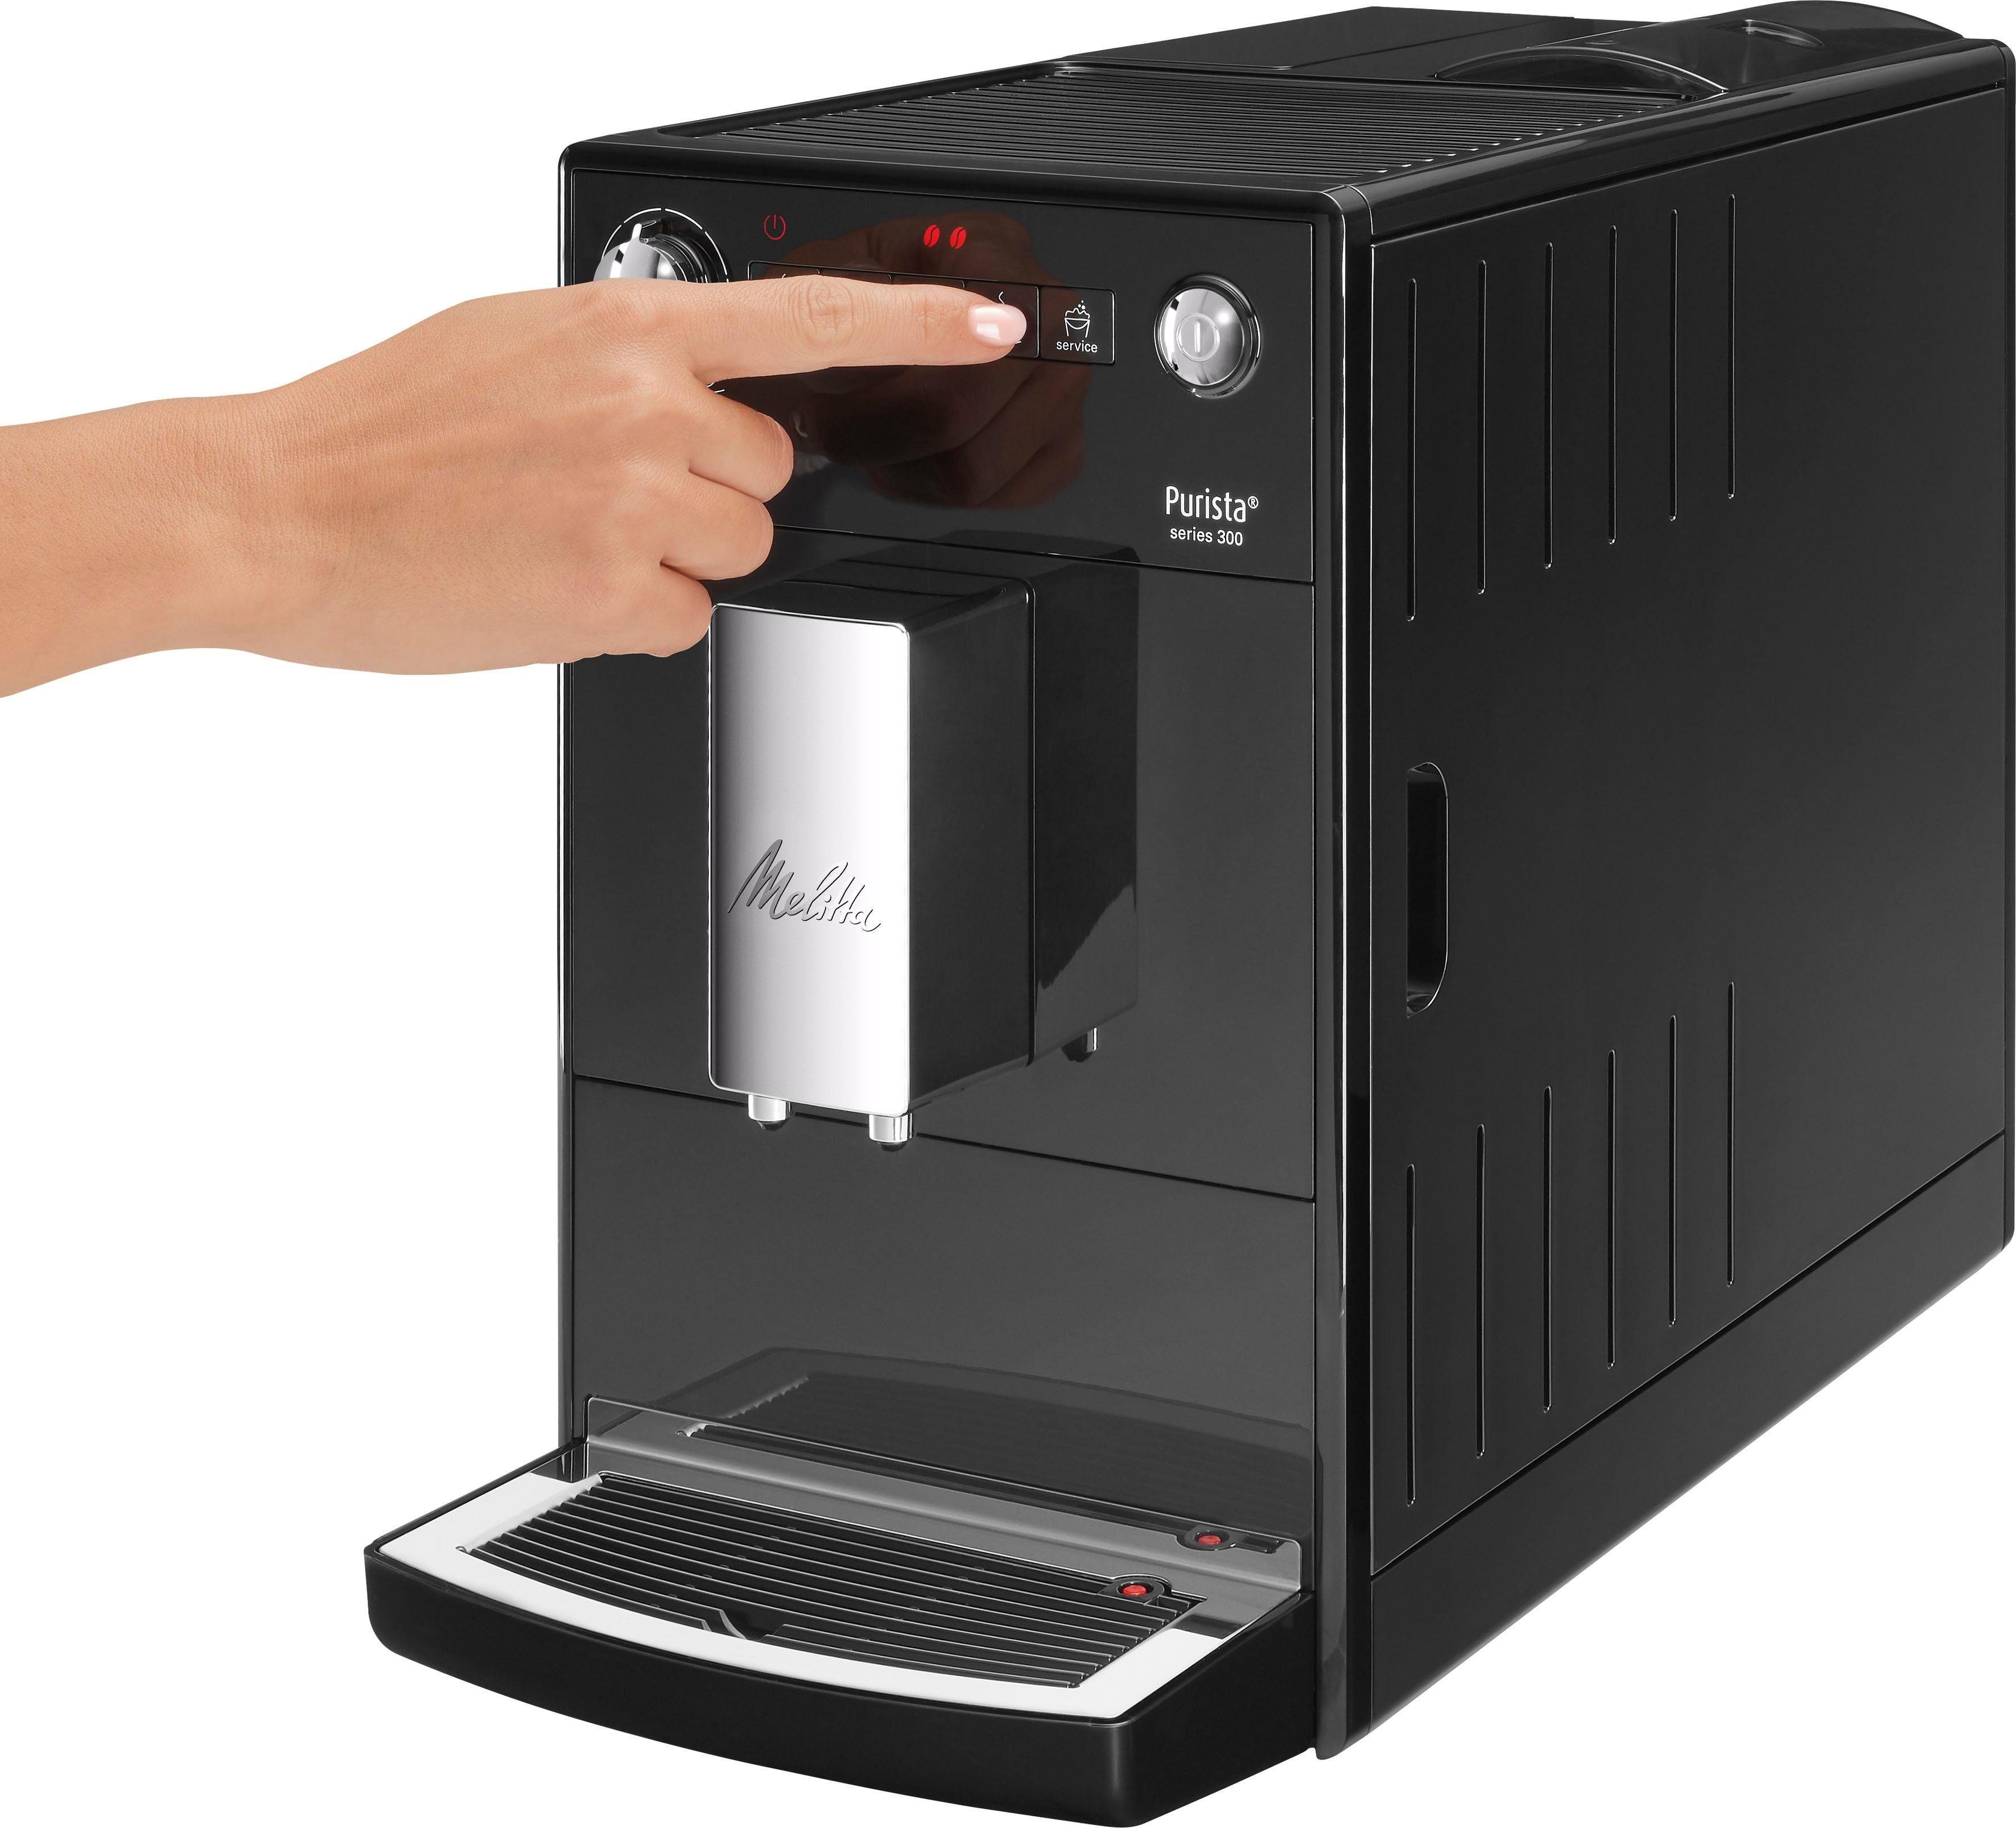 kompakt Purista® & leise Kaffeevollautomat Lieblingskaffee-Funktion, Melitta extra F230-102, schwarz,